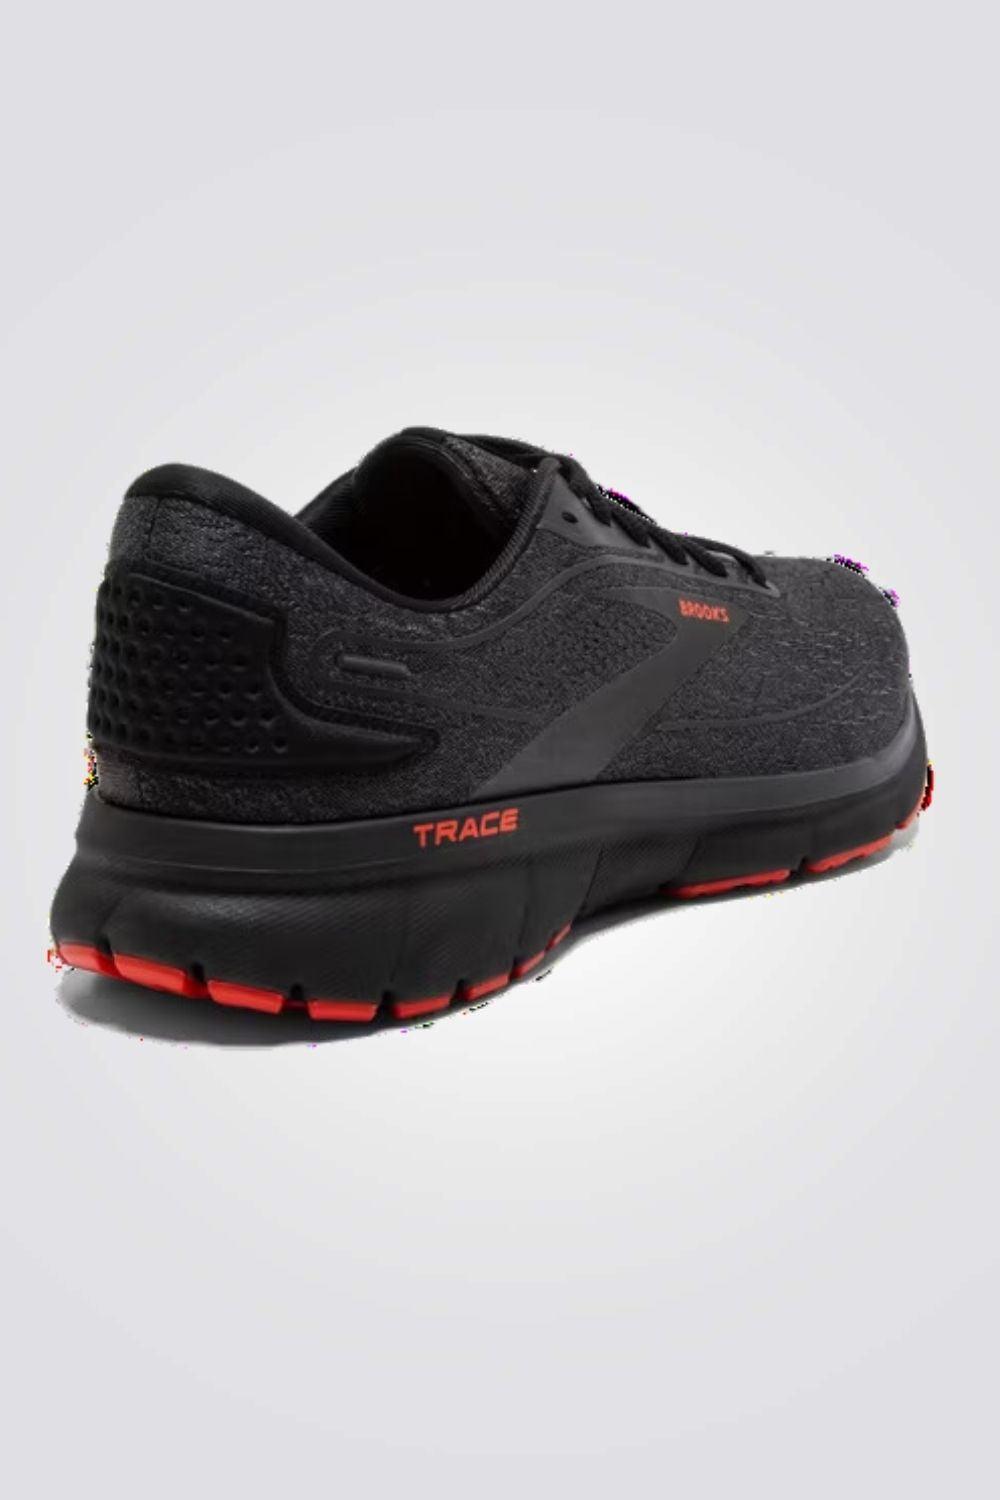 BROOKS - נעלי ספורט לגבר Trace 2 בצבע שחור - MASHBIR//365